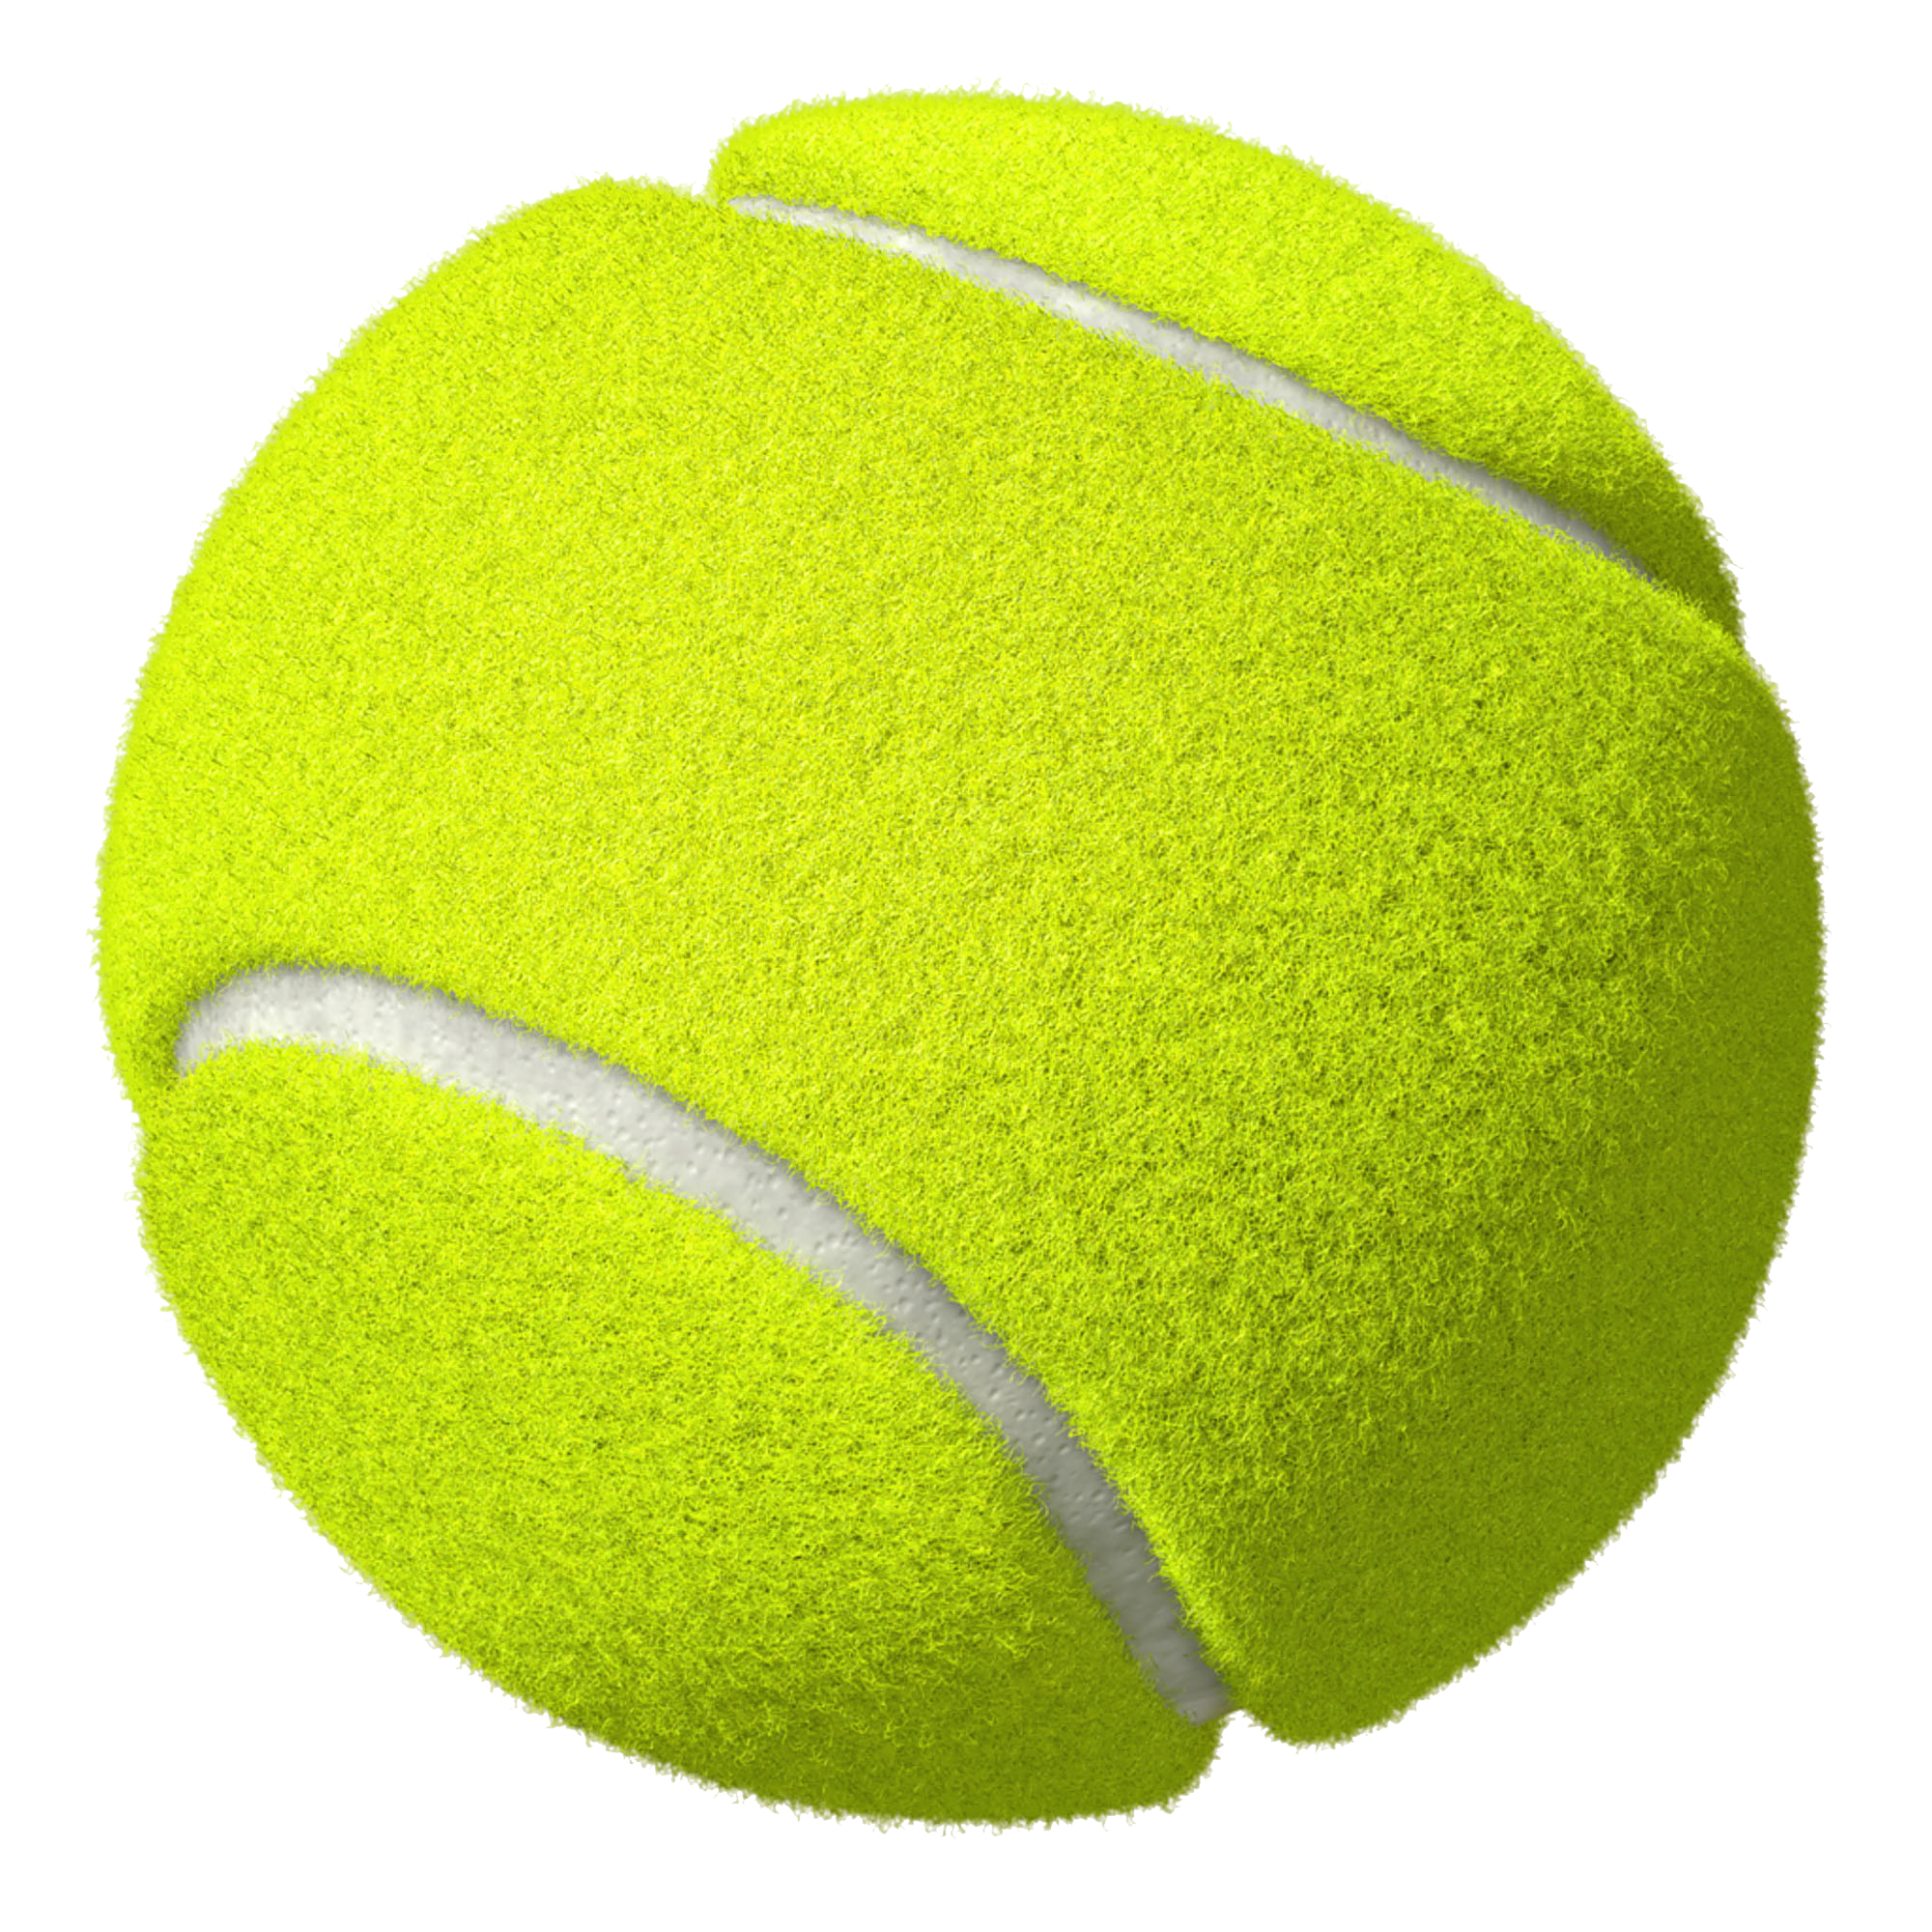 Tennis Ball Png Image - Tennis, Transparent background PNG HD thumbnail